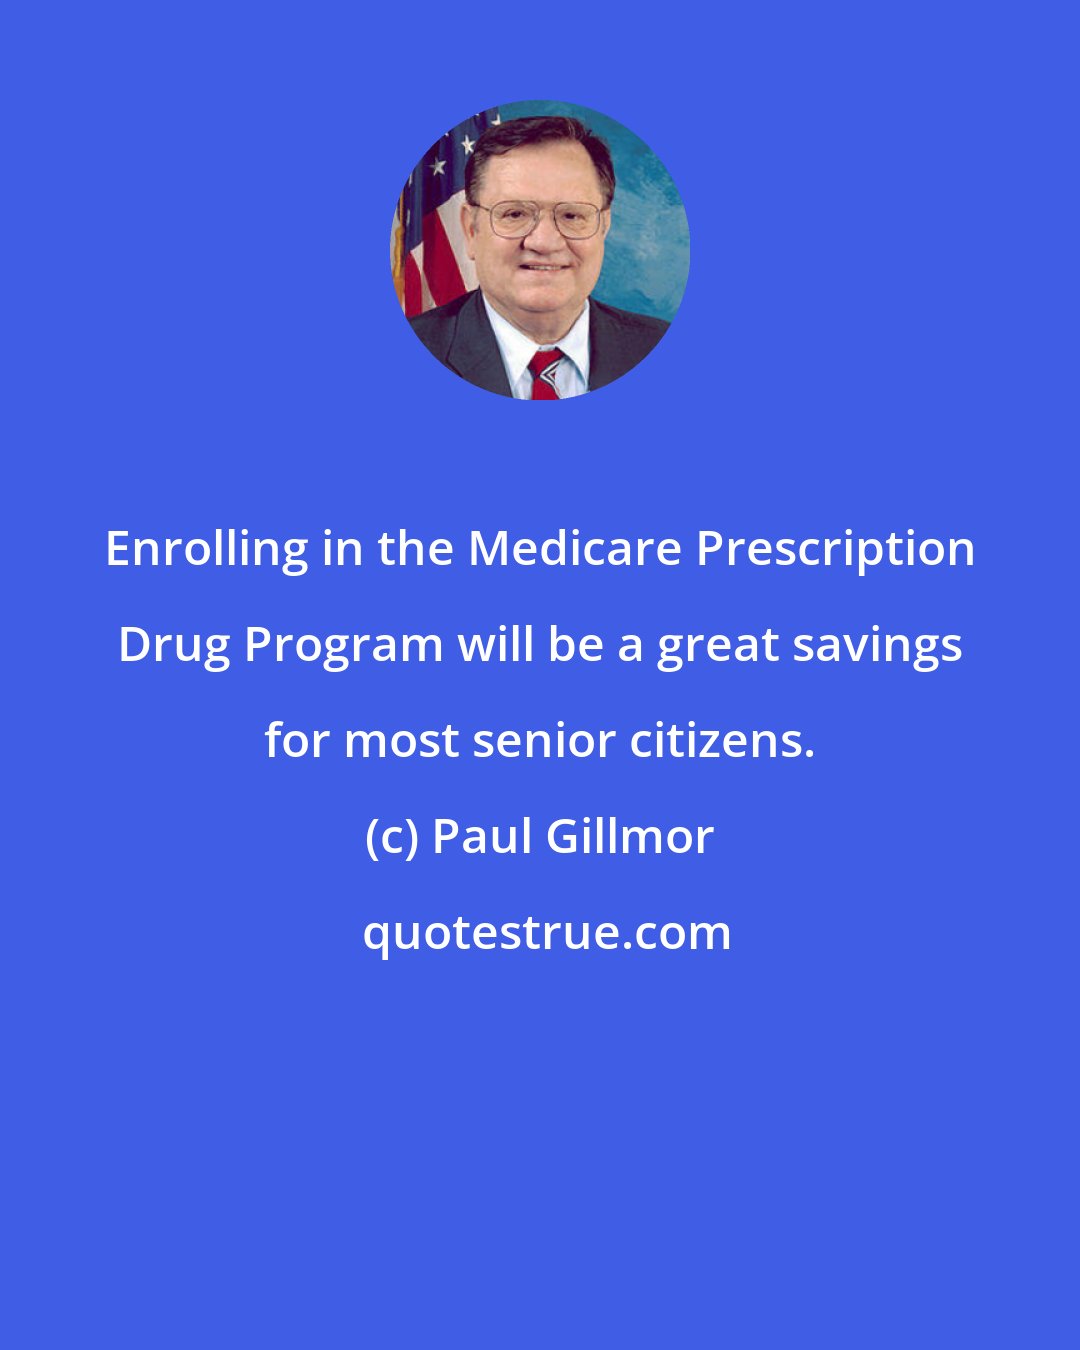 Paul Gillmor: Enrolling in the Medicare Prescription Drug Program will be a great savings for most senior citizens.